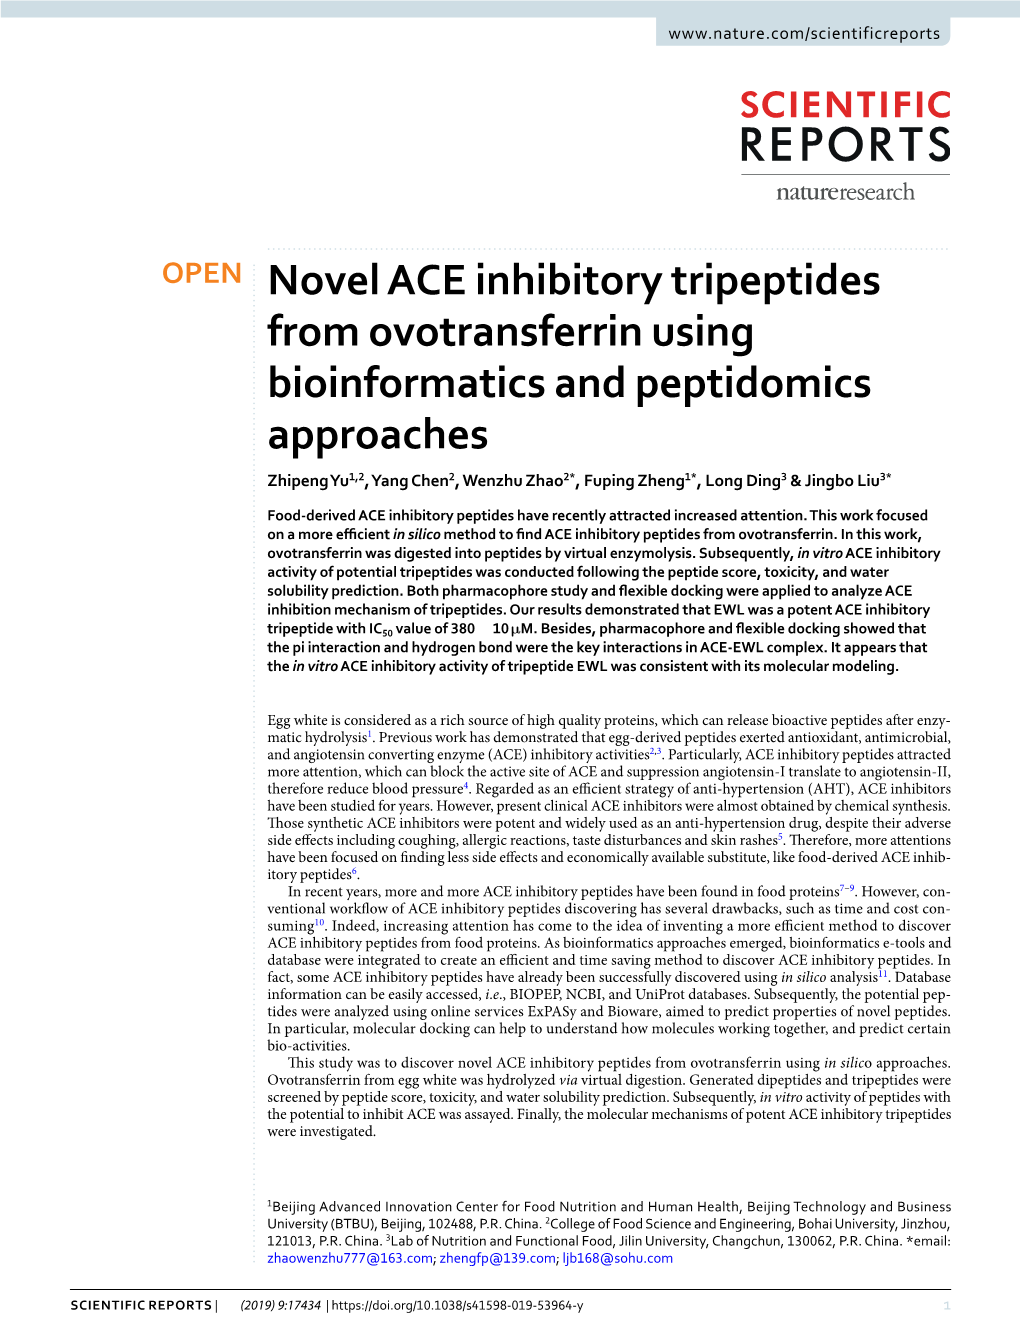 Novel ACE Inhibitory Tripeptides from Ovotransferrin Using Bioinformatics